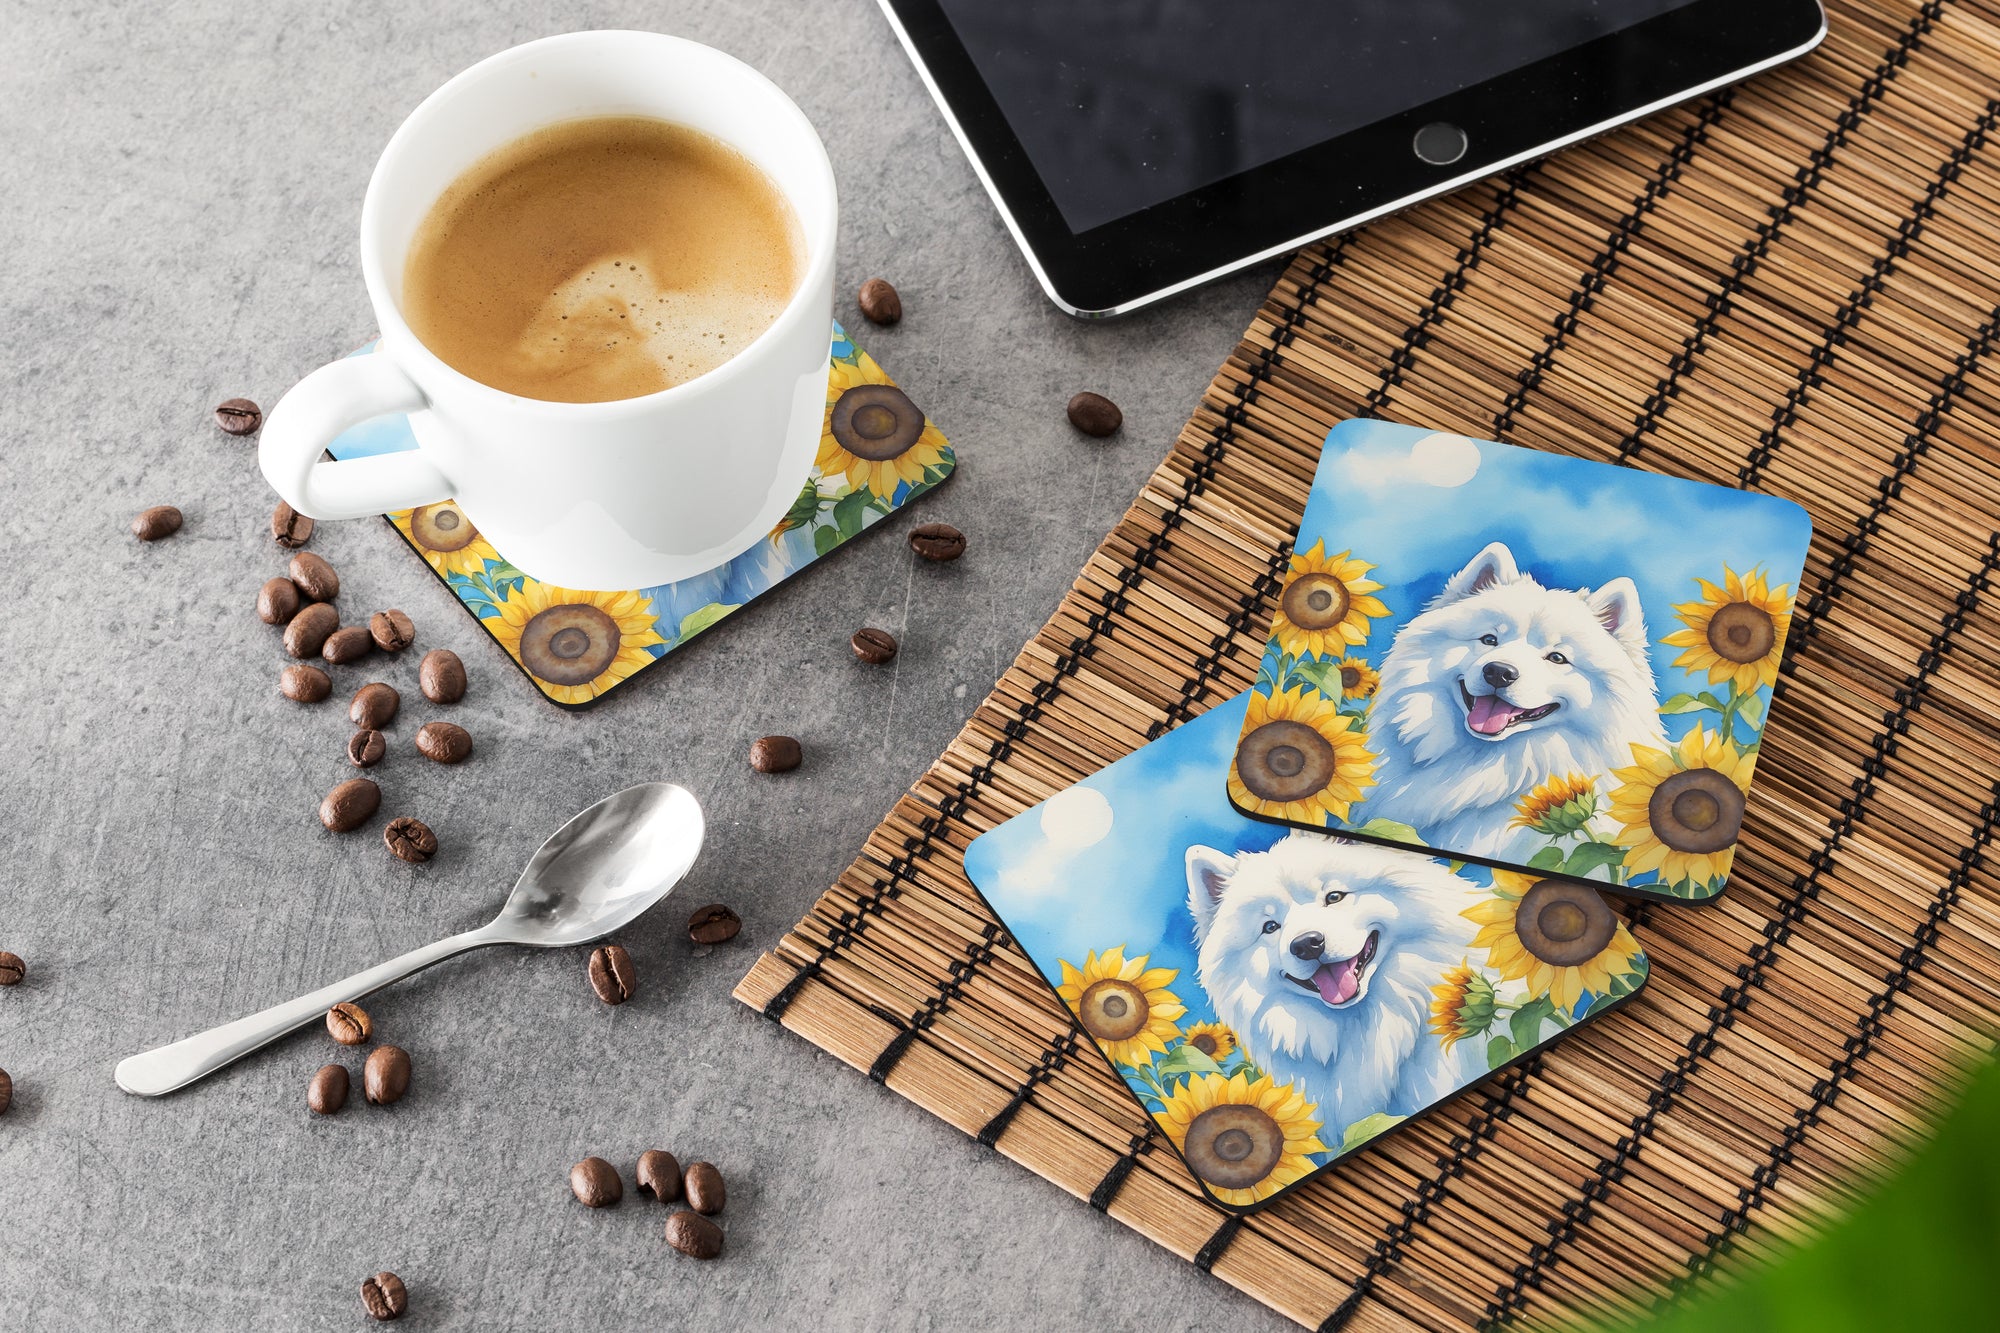 Samoyed in Sunflowers Foam Coasters